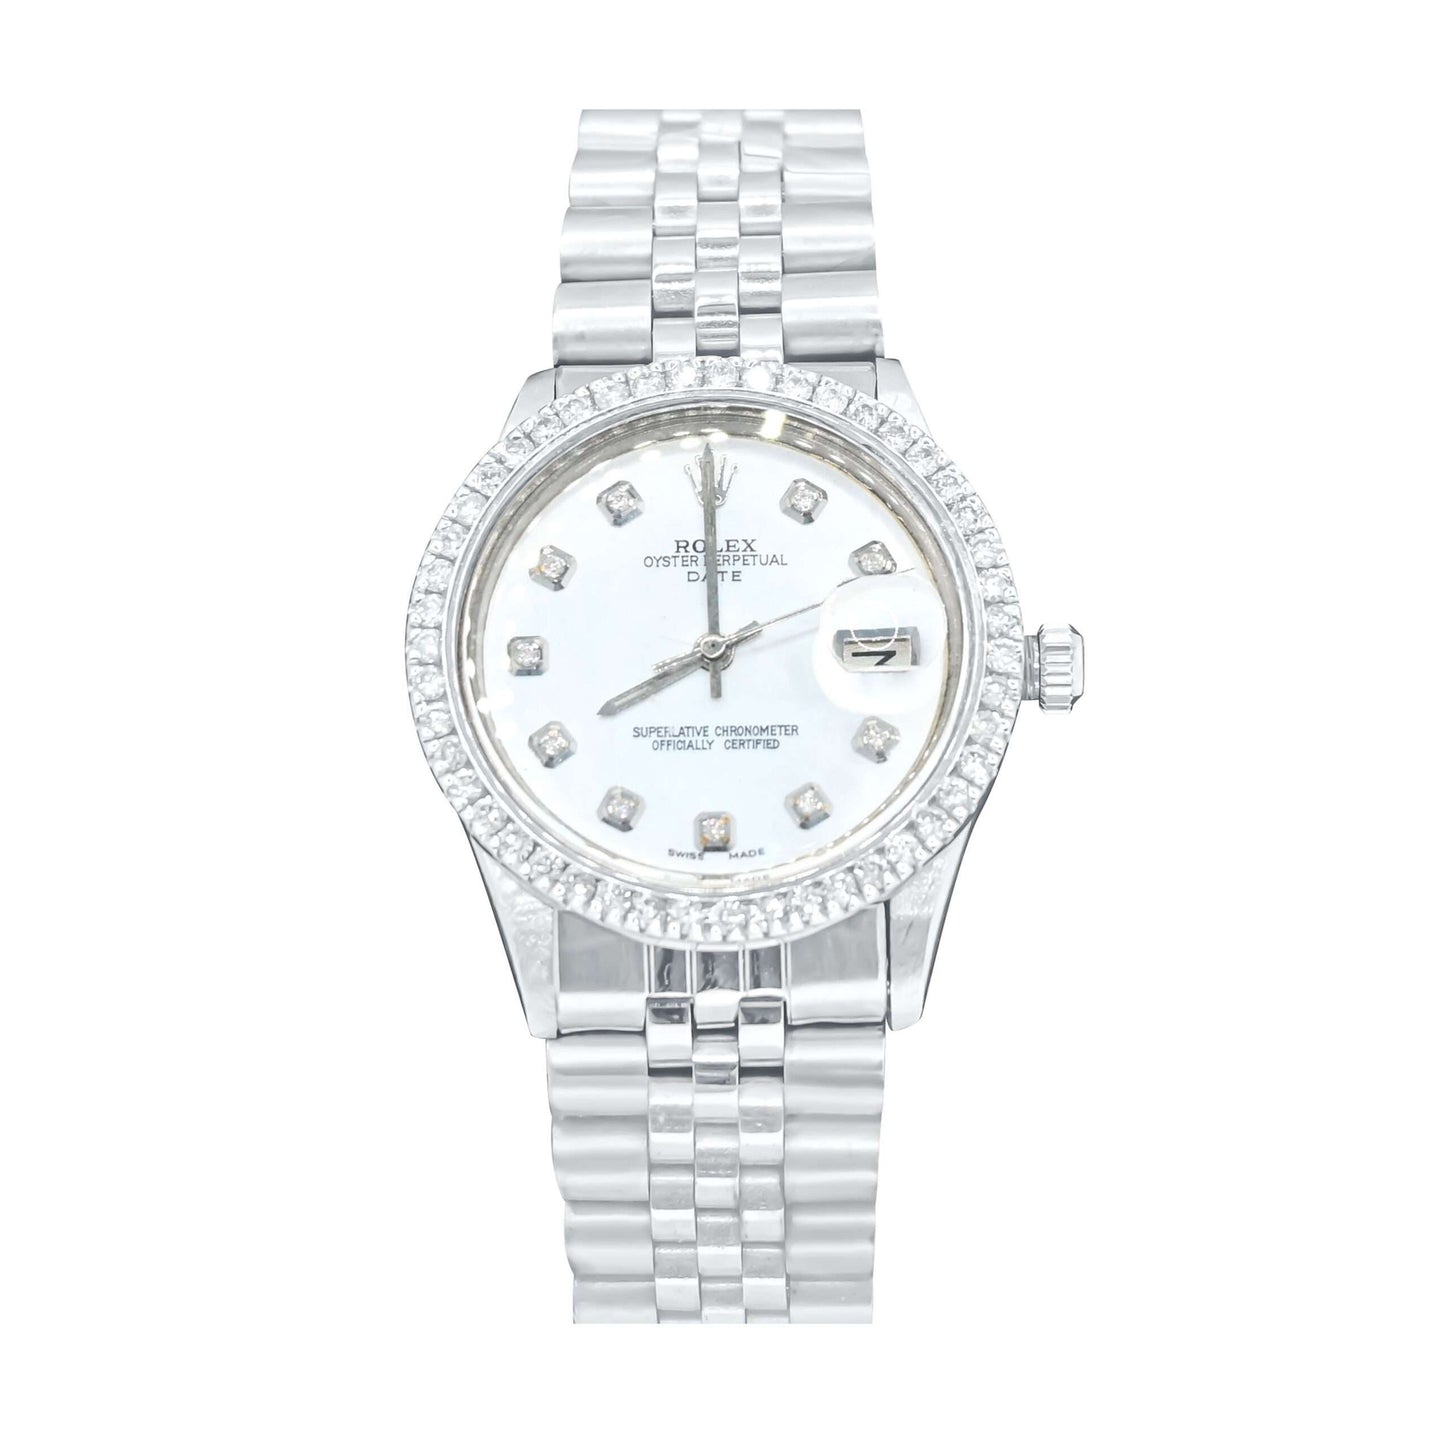 Rolex Day-Date 34mm 2CT Diamond Bezel Silver Stainless Steel Watch